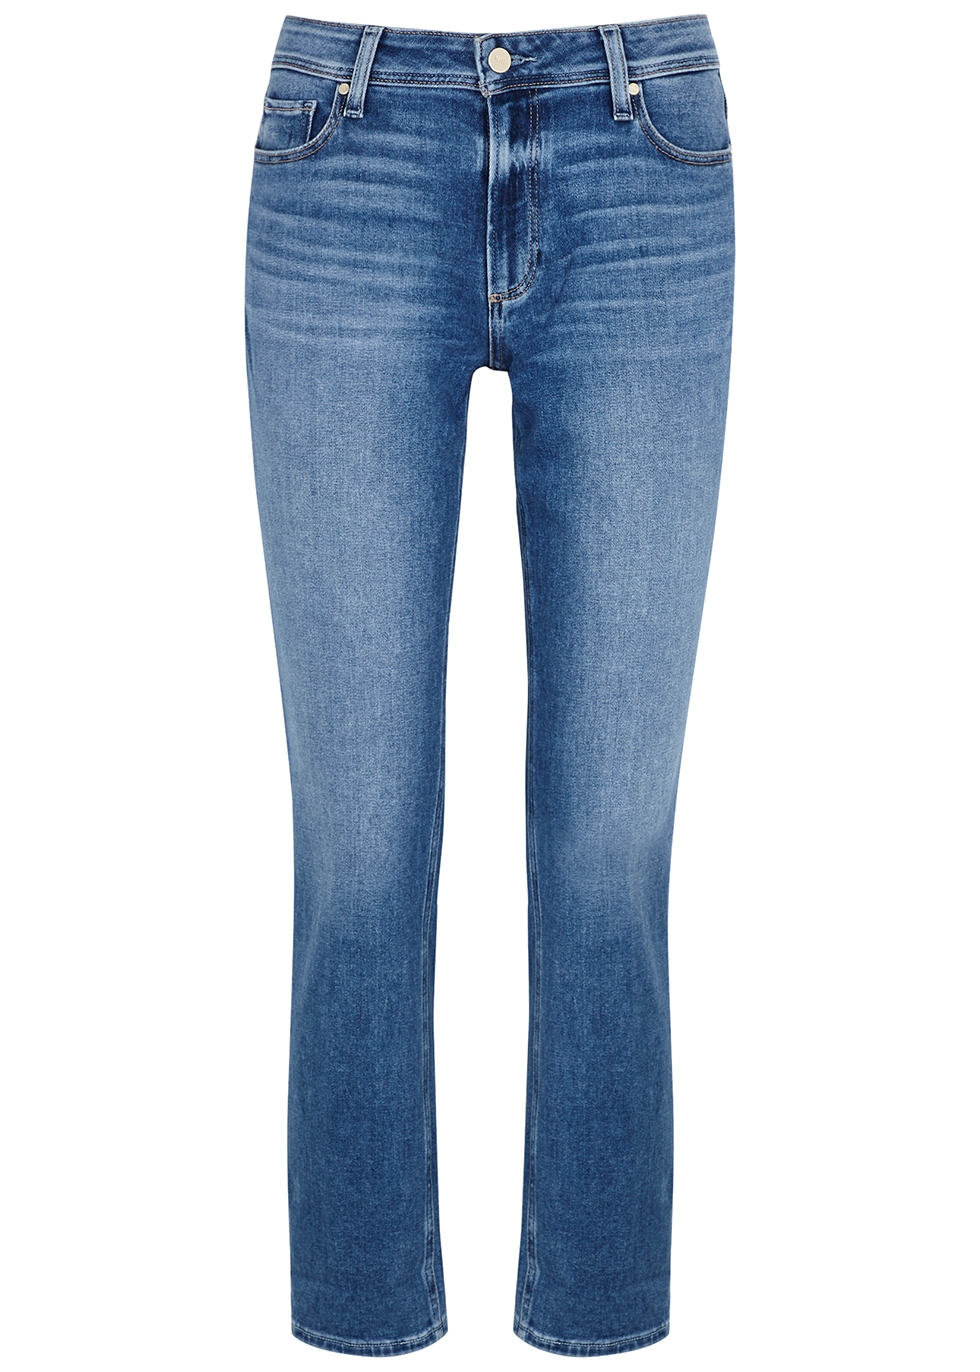 Brigitte Transcend blue skinny boyfriend jeans